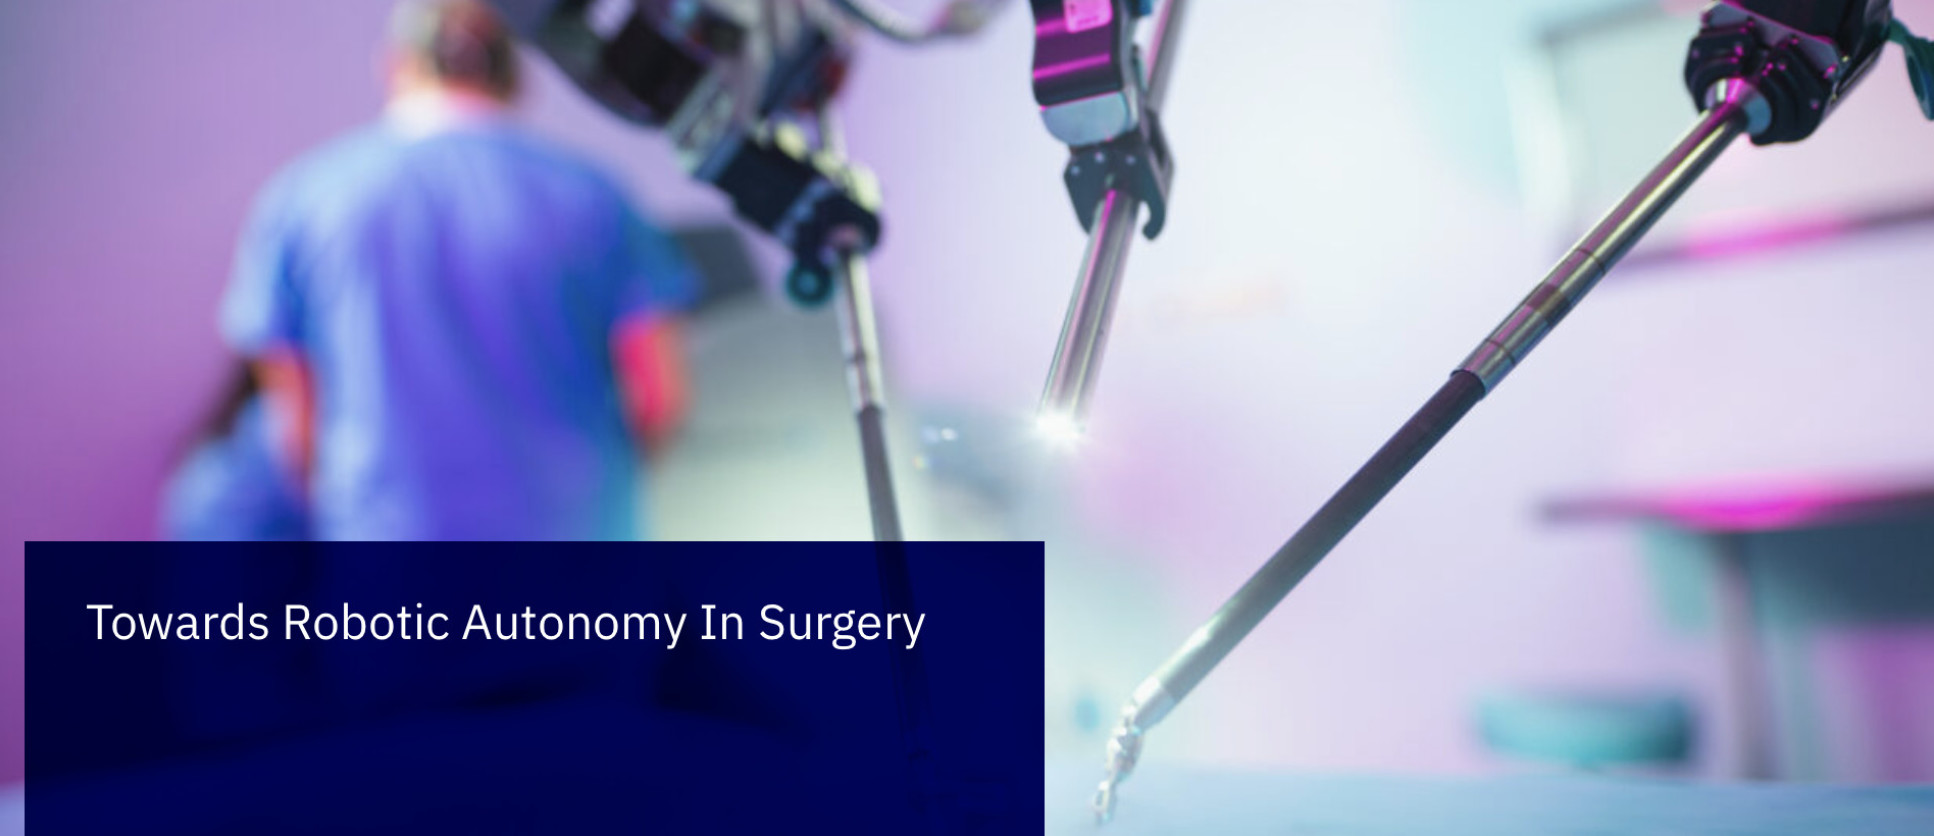 HSMR21 Workshop- 'Towards Robotic Autonomy In Surgery'